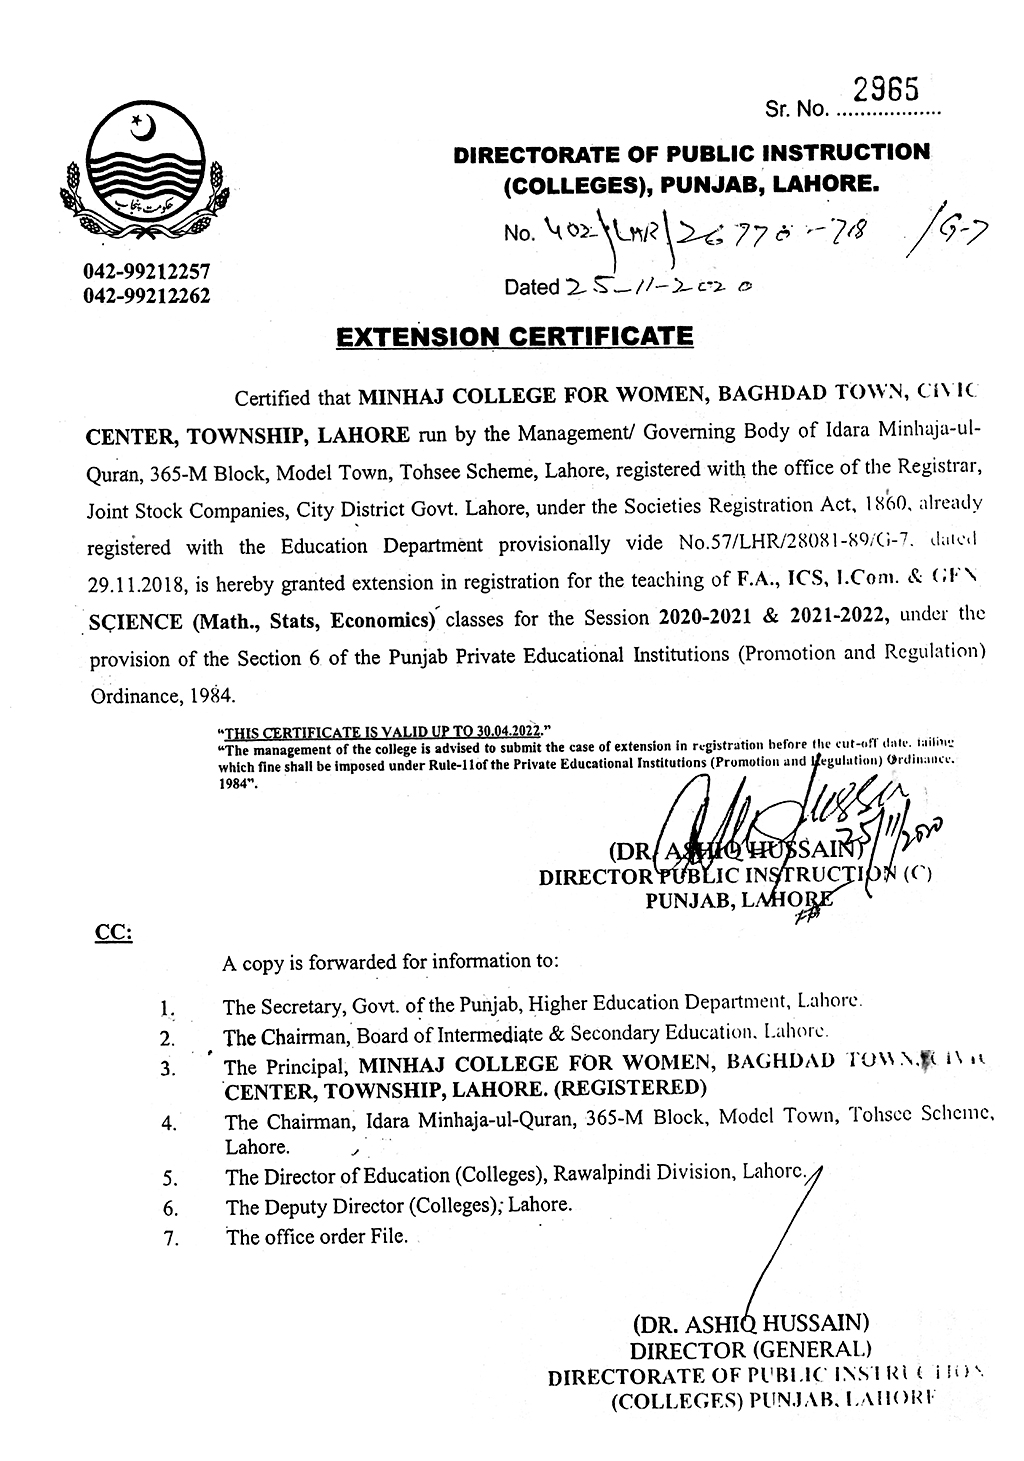 Registration of Minhaj College for Women (MCW)